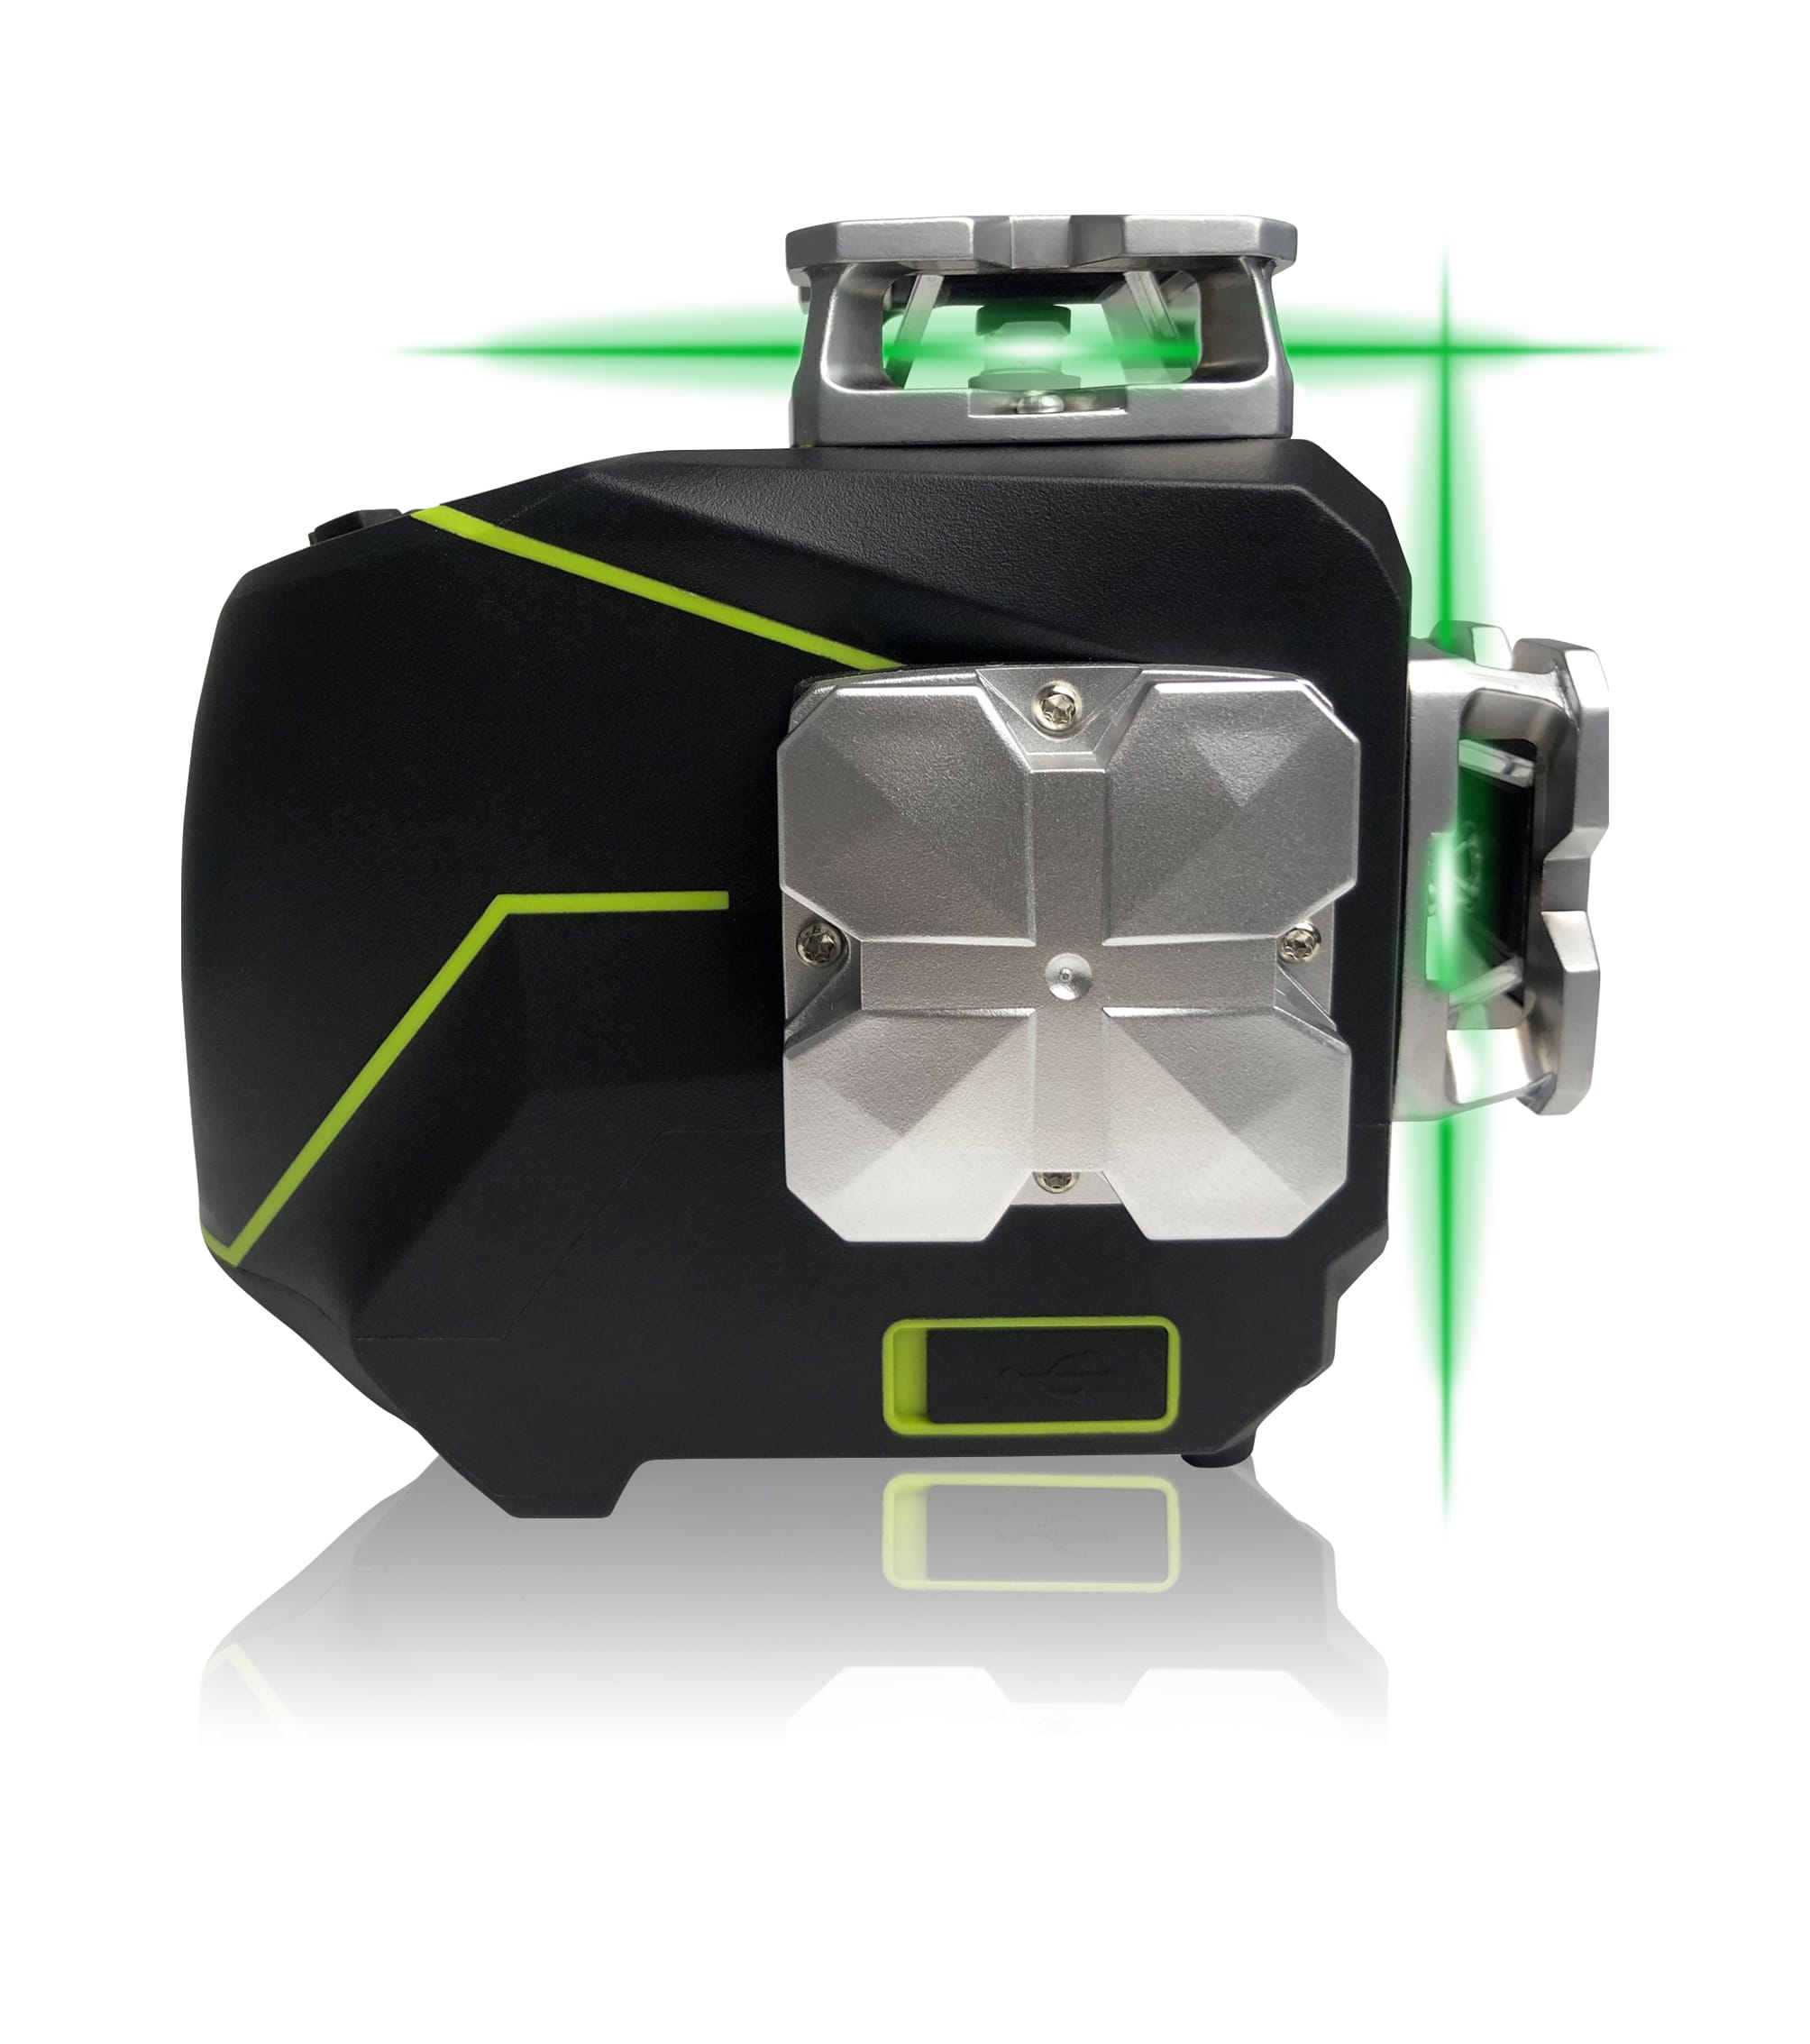 Elma Instruments - Elma Laser X360-2 linjelaser
2 stk. grønne 360° laserlinjer